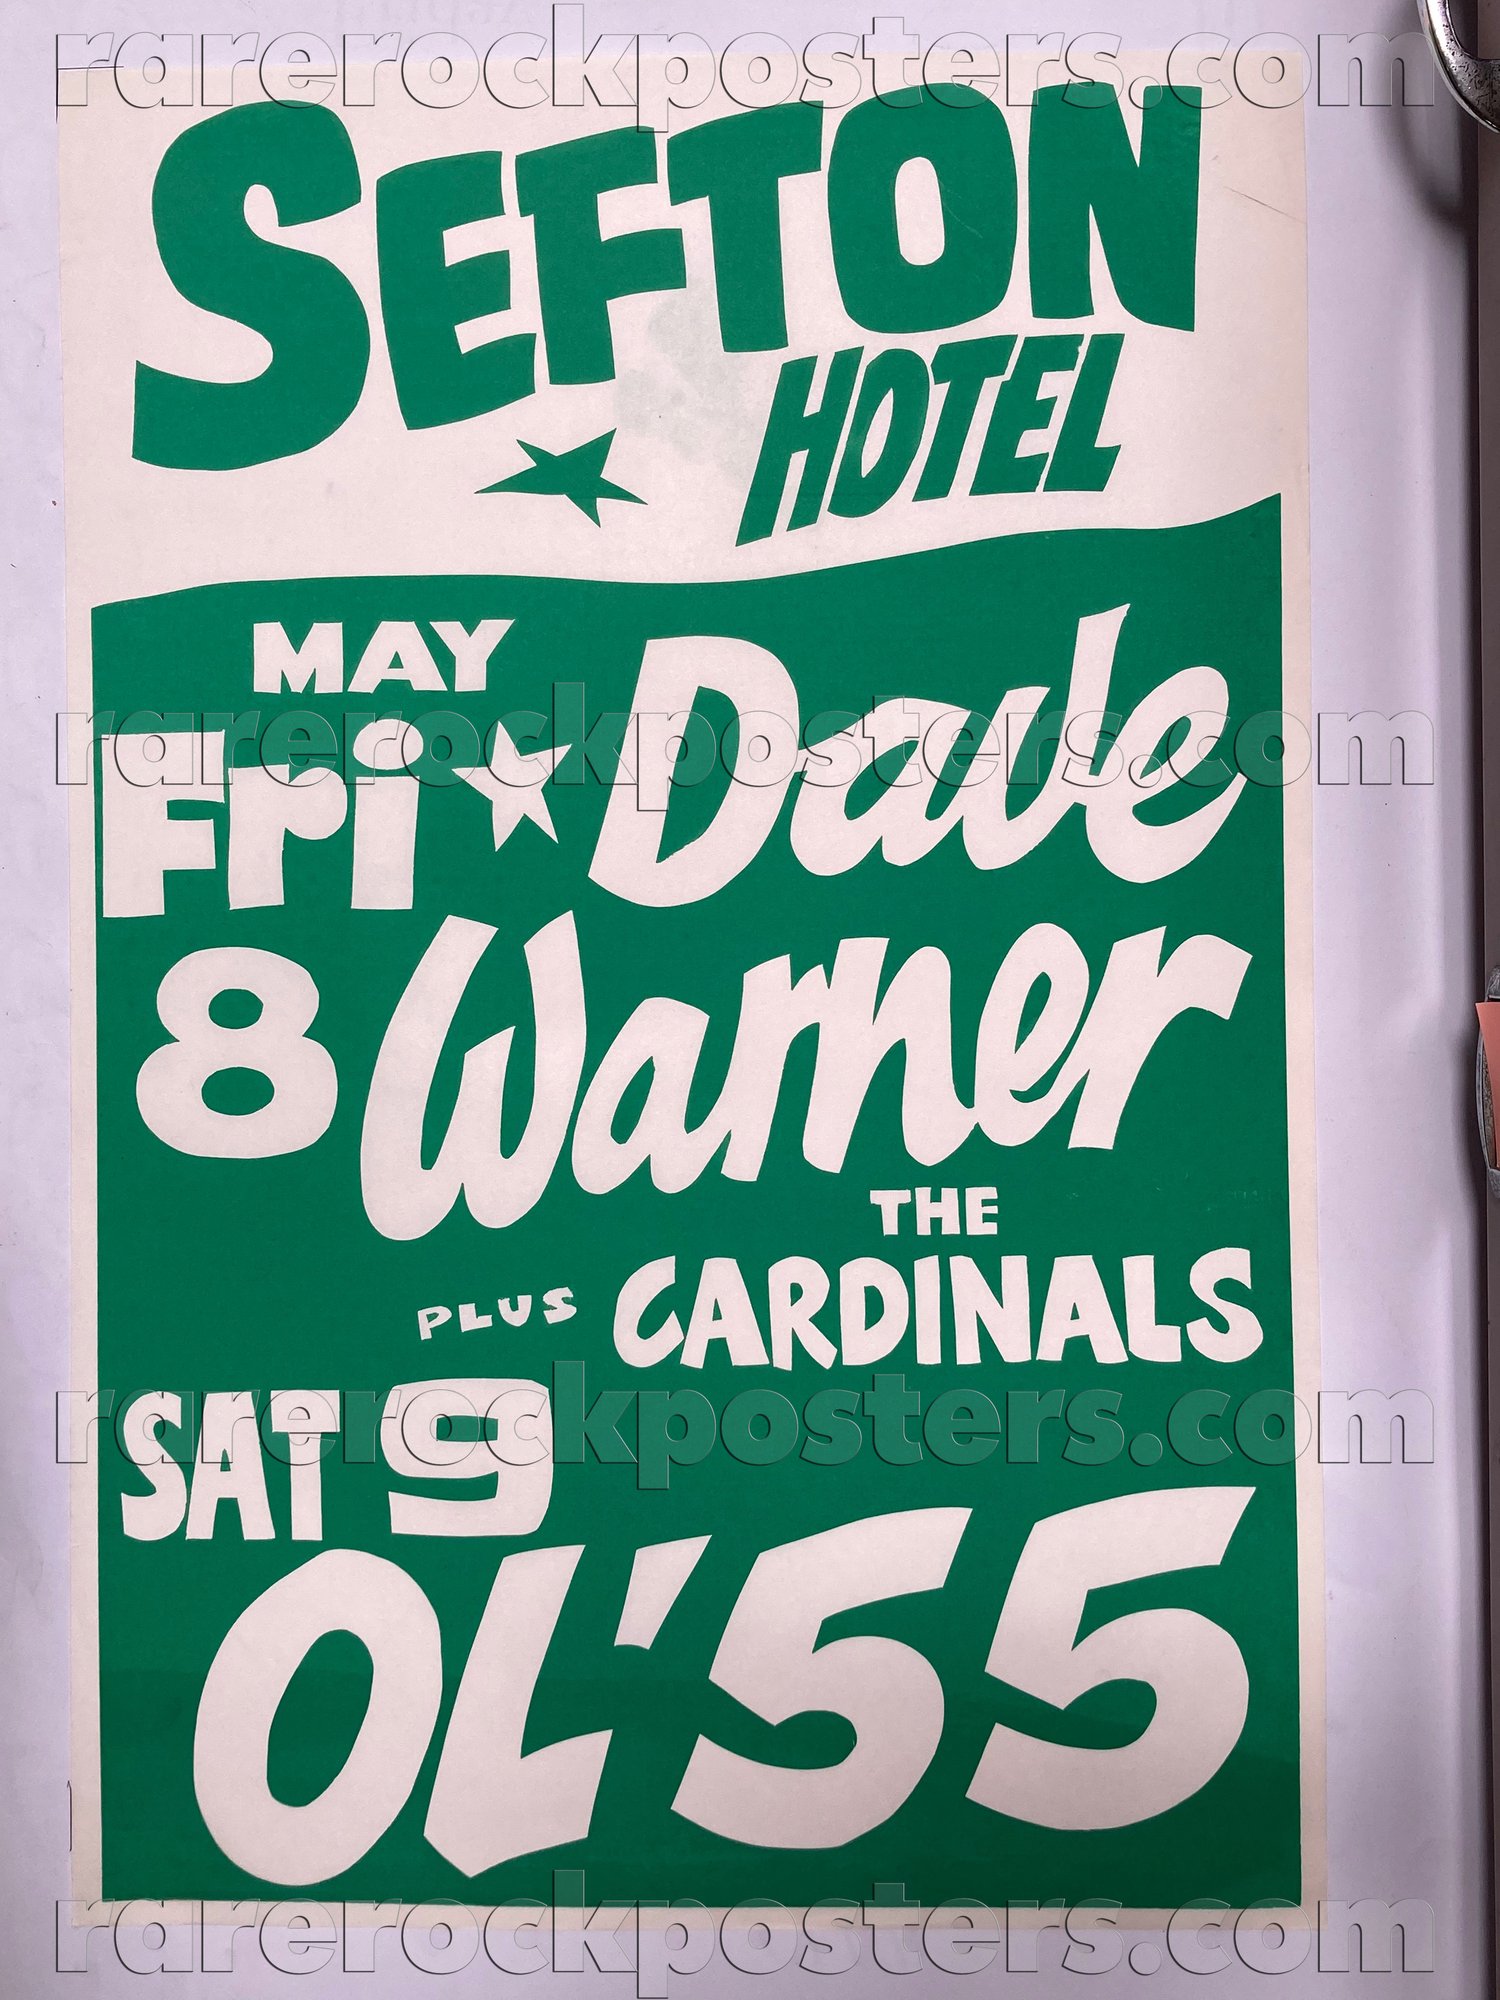 DAVE WARNER / OL '55 / THE CARDINALS ~ ORIGINAL 1981 AUSTRALIAN GIG POSTER ~ SEFTON HOTEL ~ SYDNEY